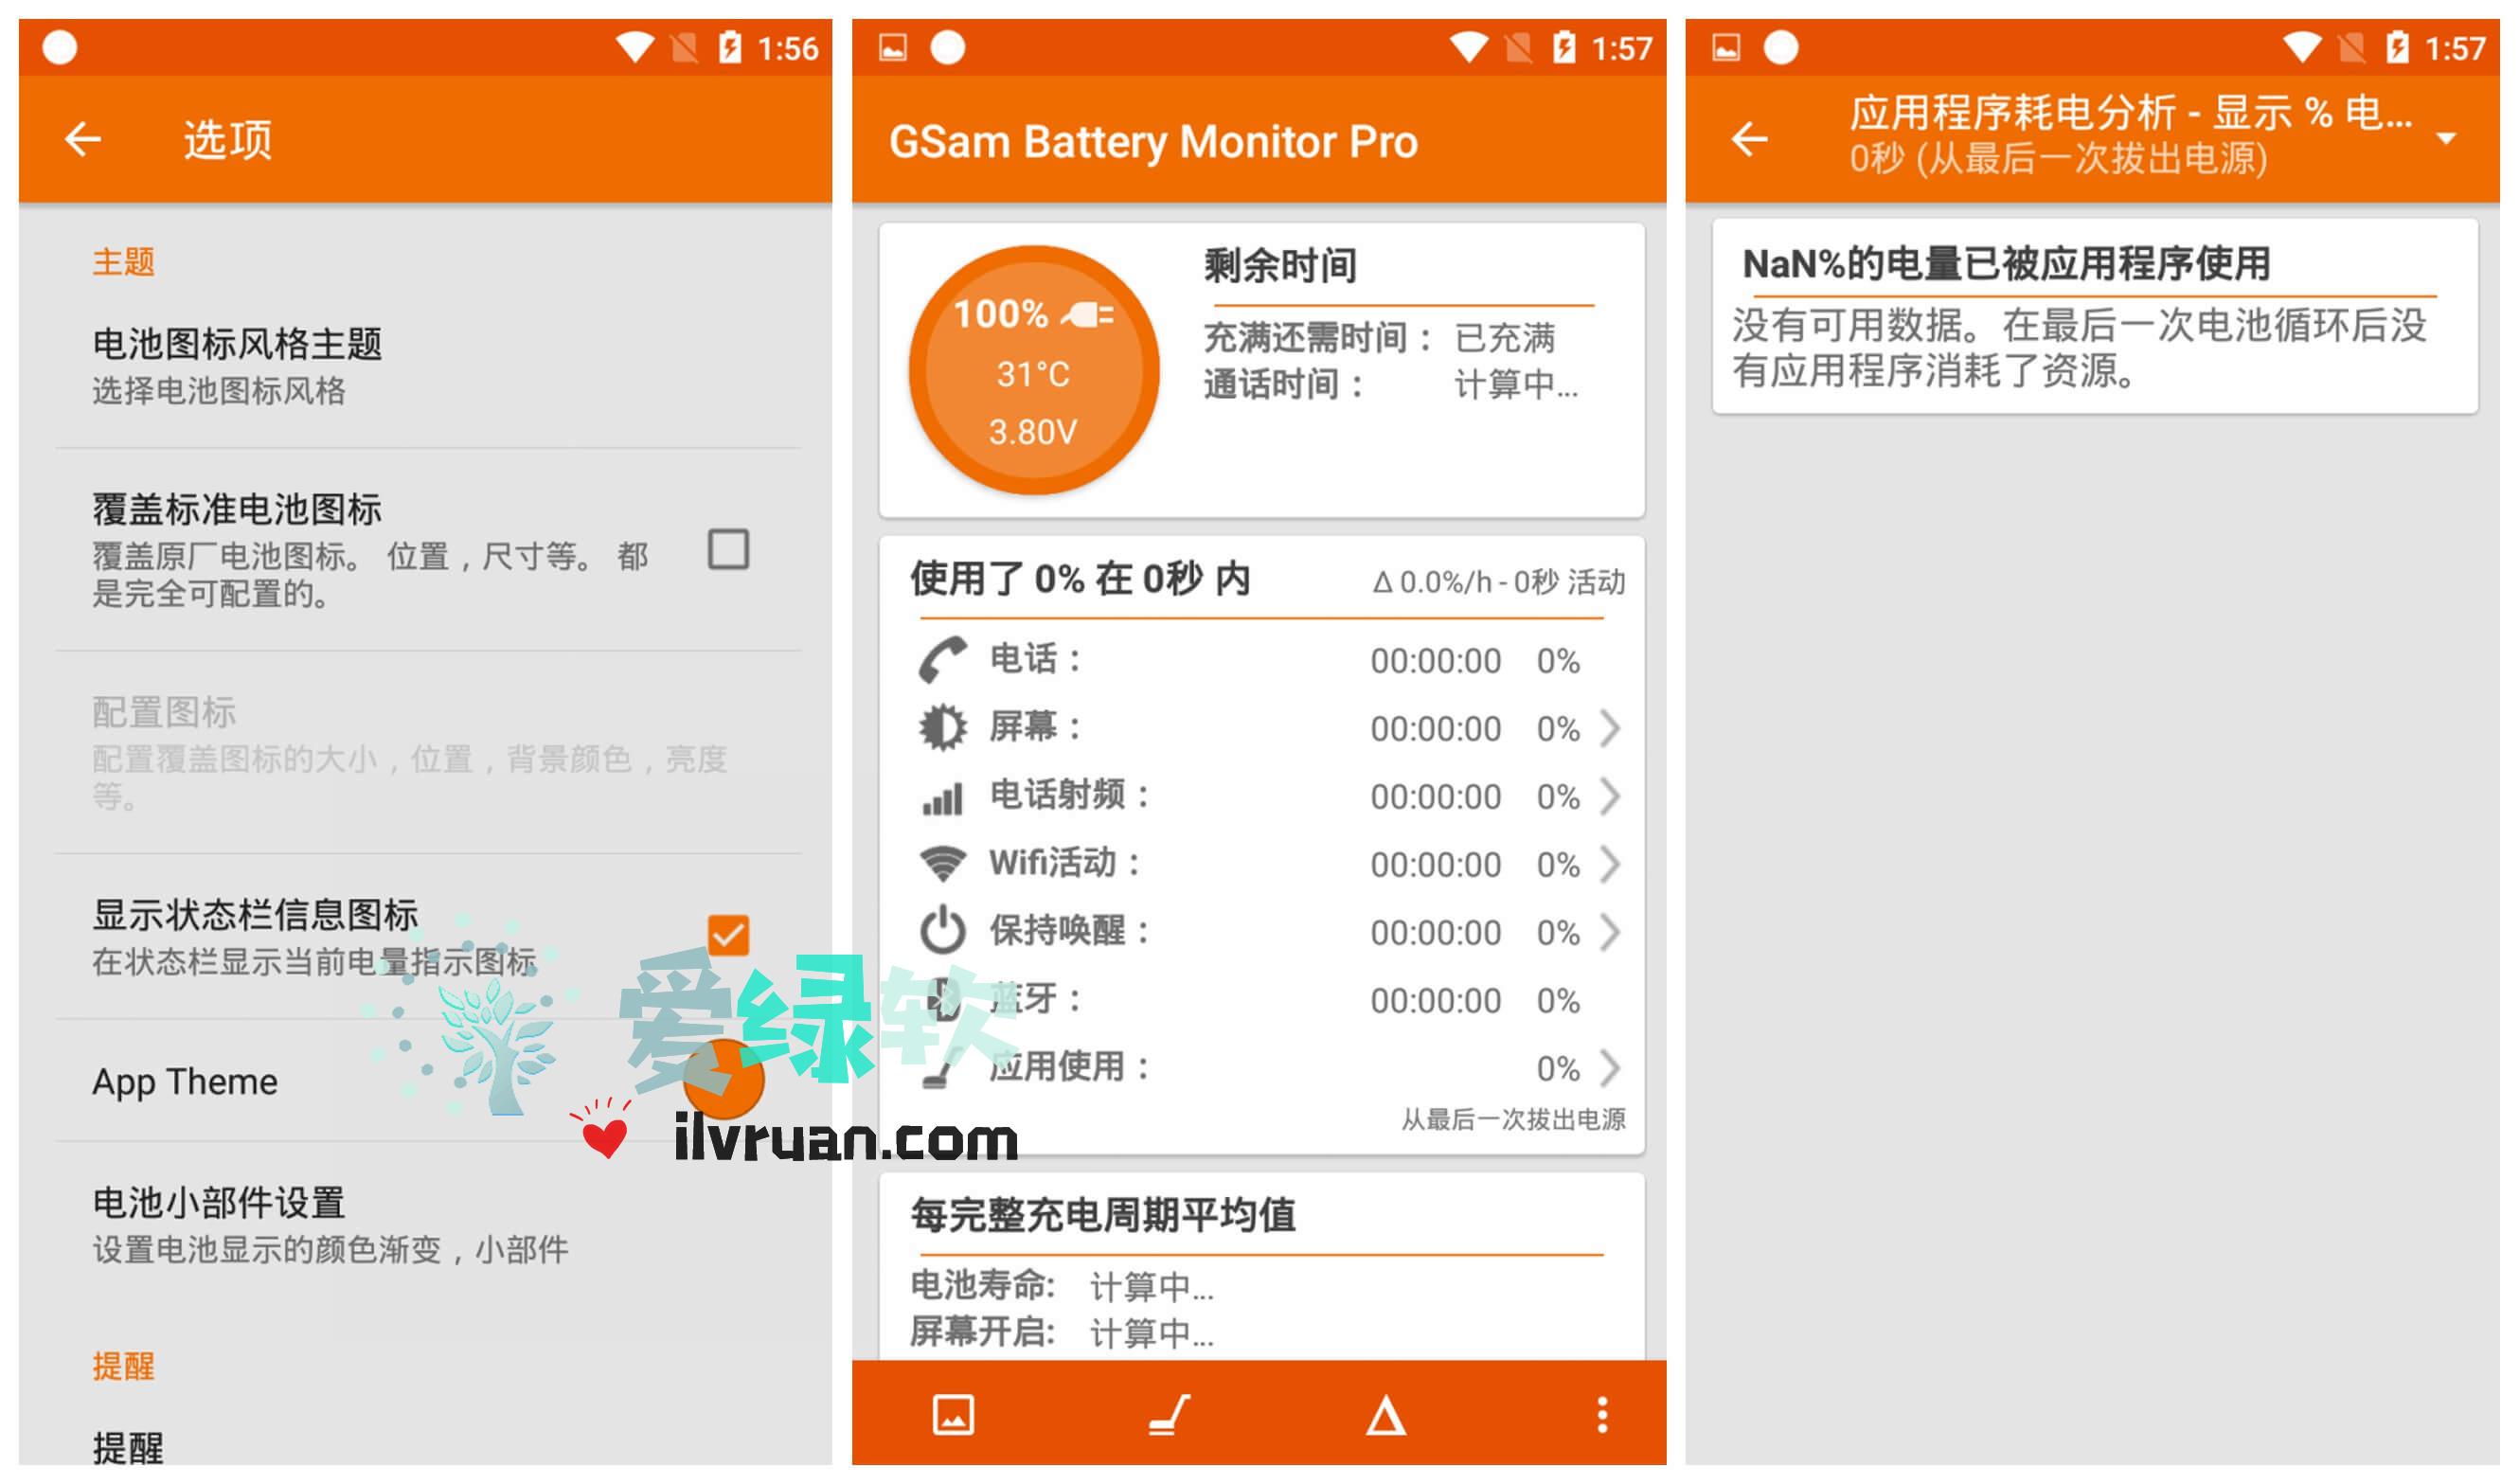 安卓 手机电池监视 GSam Battery Monitor Pro v3.38 特别版